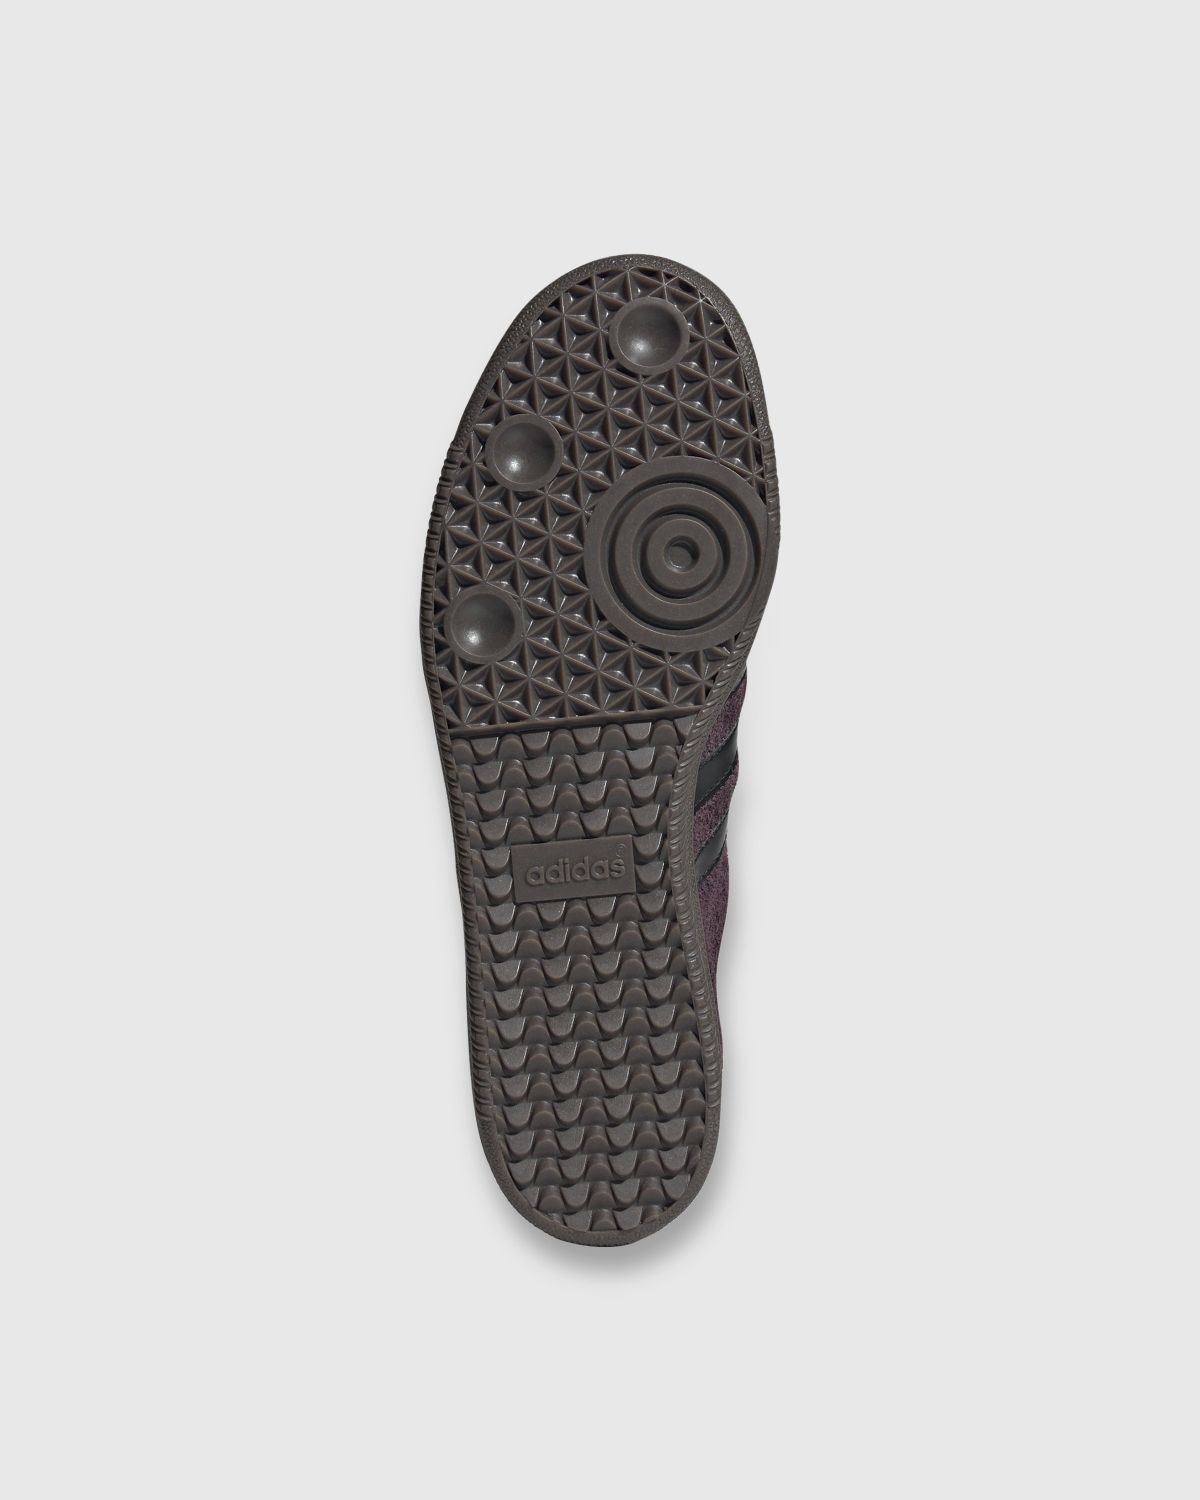 Adidas – State Brown - Sneakers - Brown - Image 6